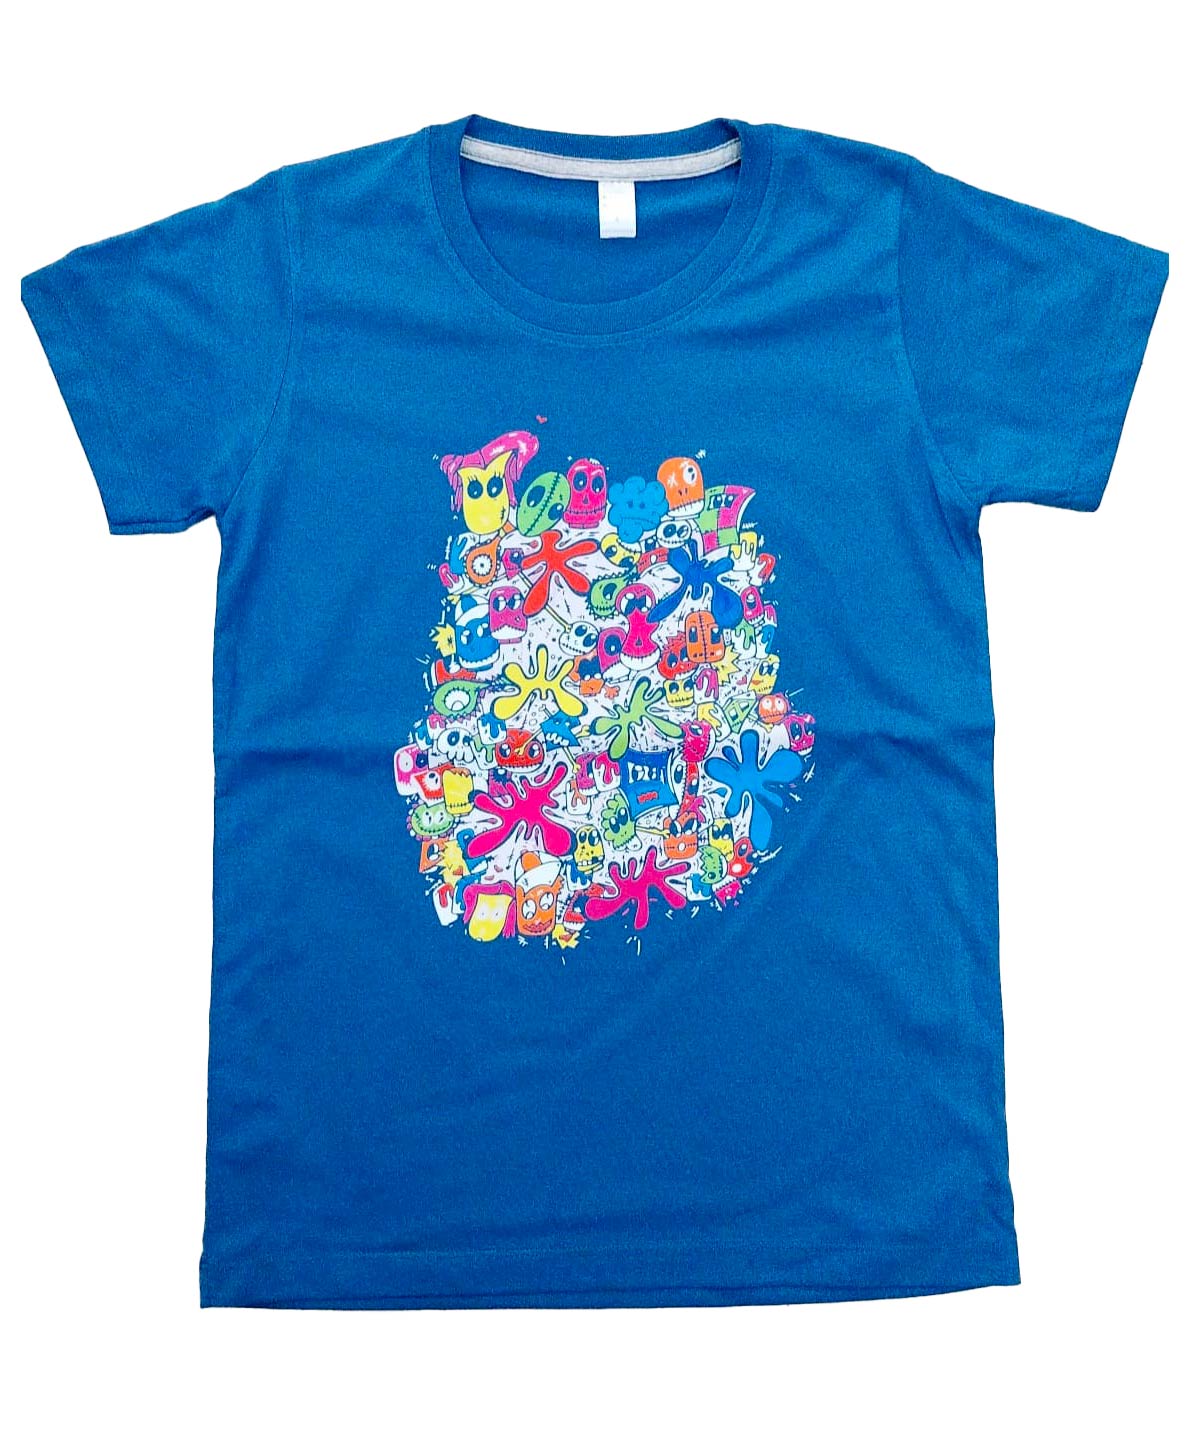 Tee-shirt fullcolor bleau by lydiaa